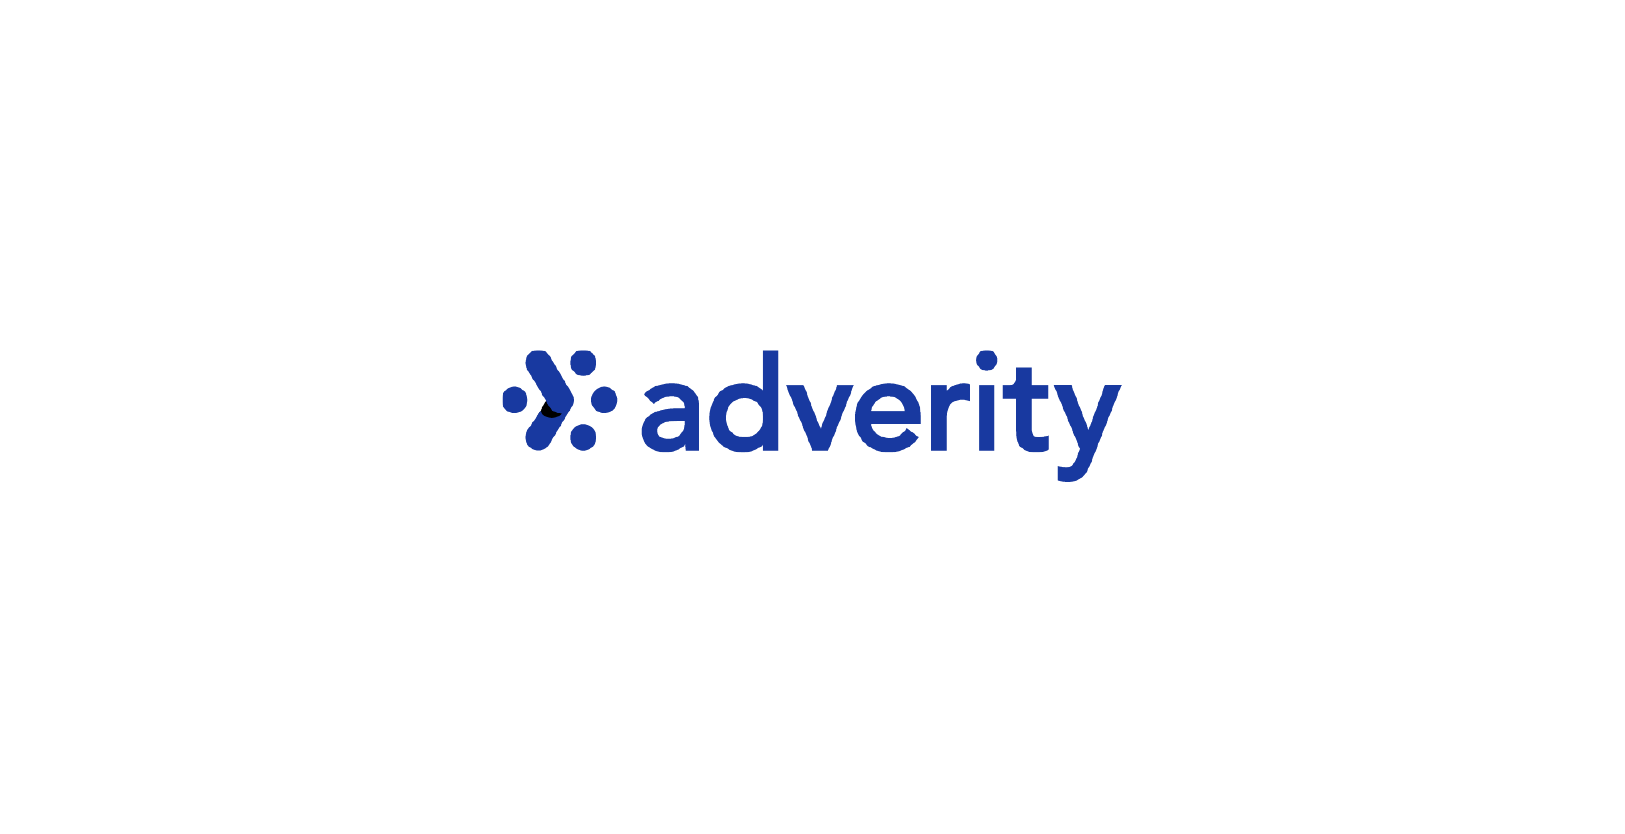 Vision Fund investment portfolio company Adverity's logo